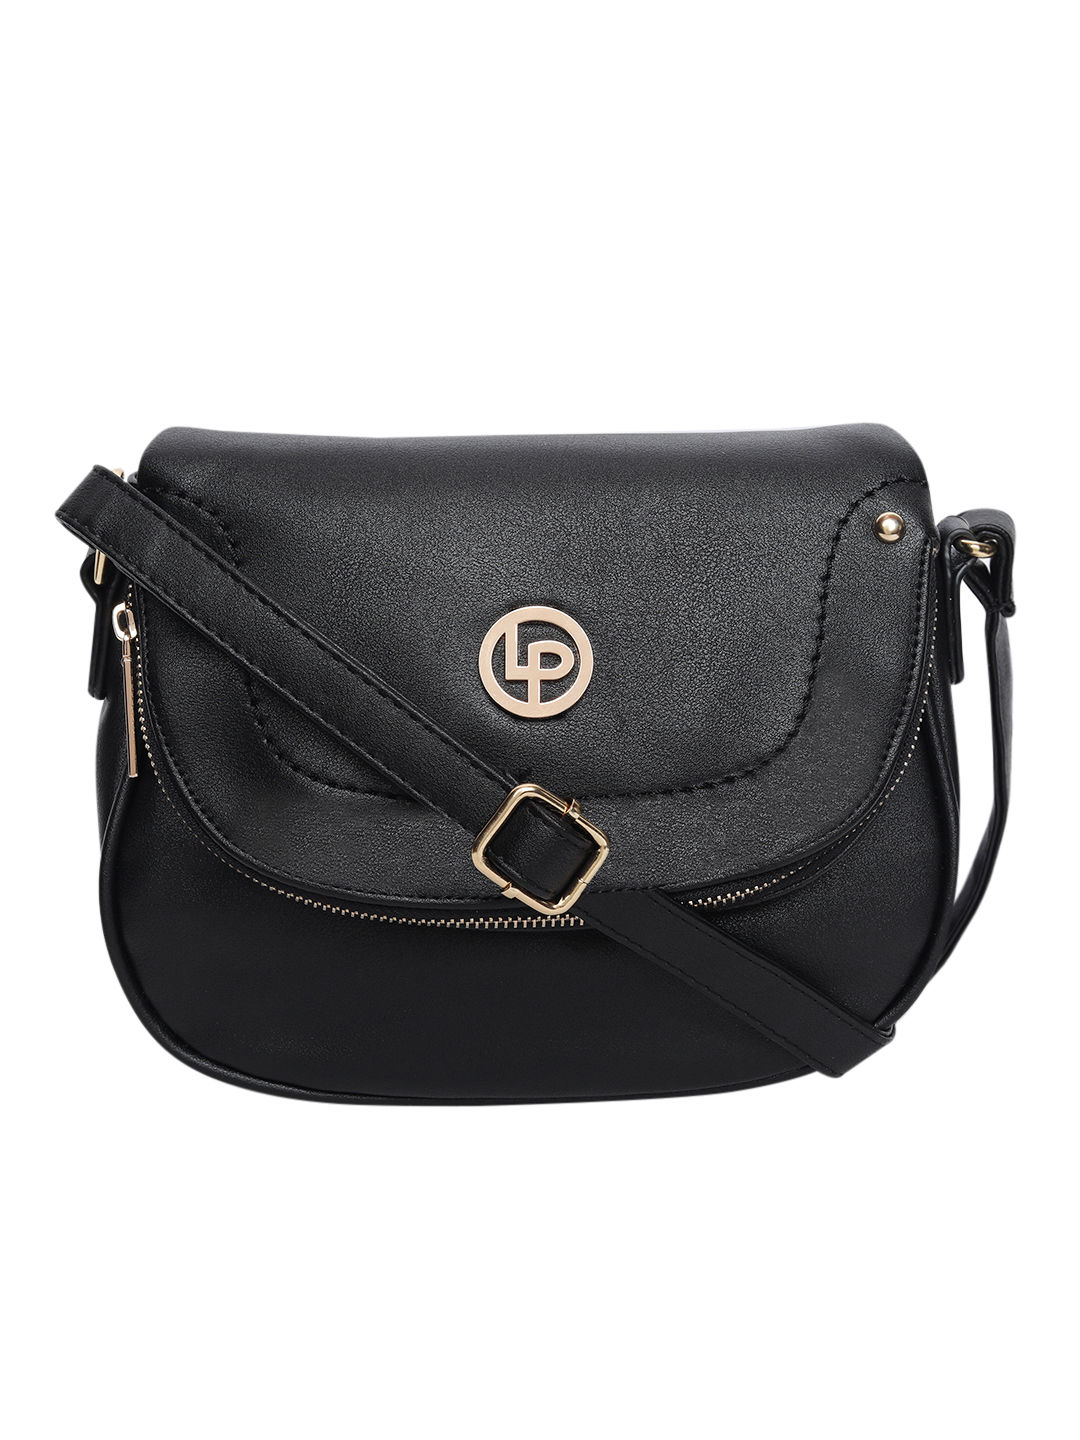 Plain Handbags Lino Perros Women's Handbag, For Casual Wear, 400 G